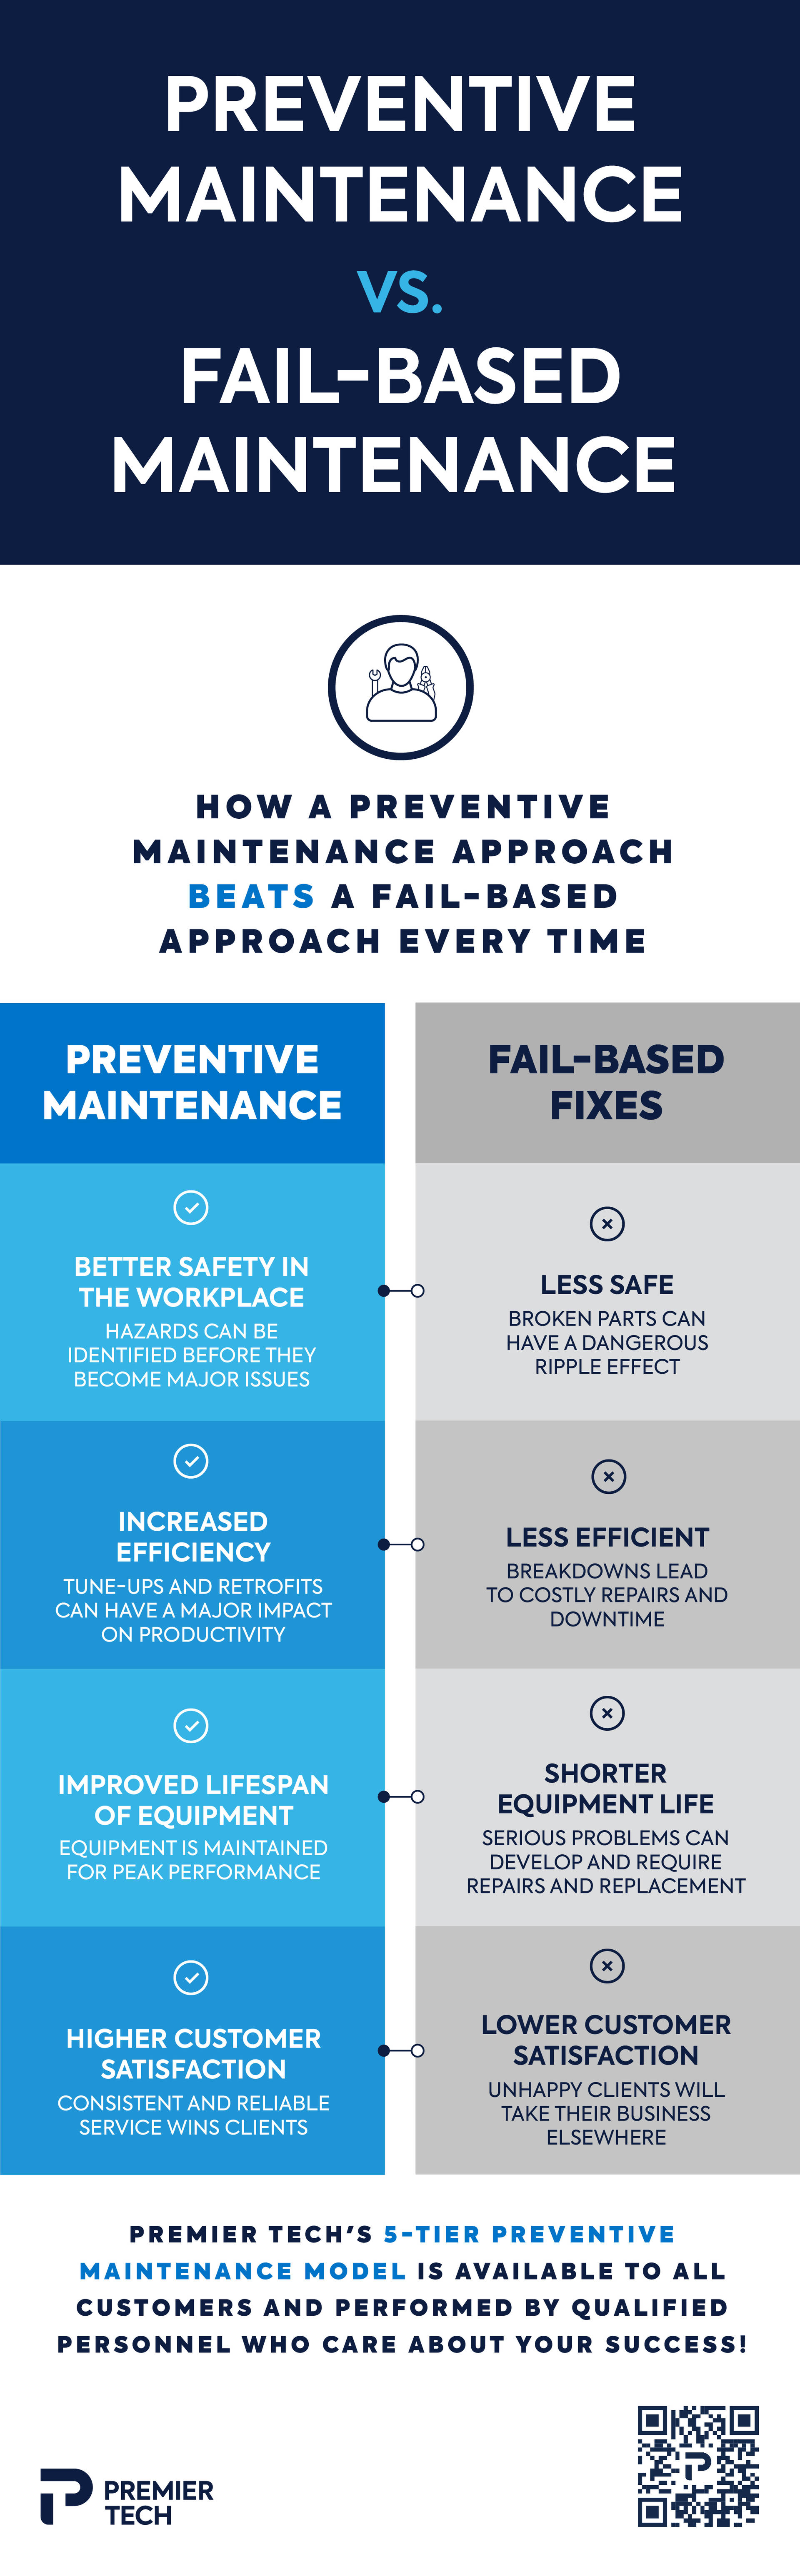 Comparing preventive maintenance vs fail-based maintenance